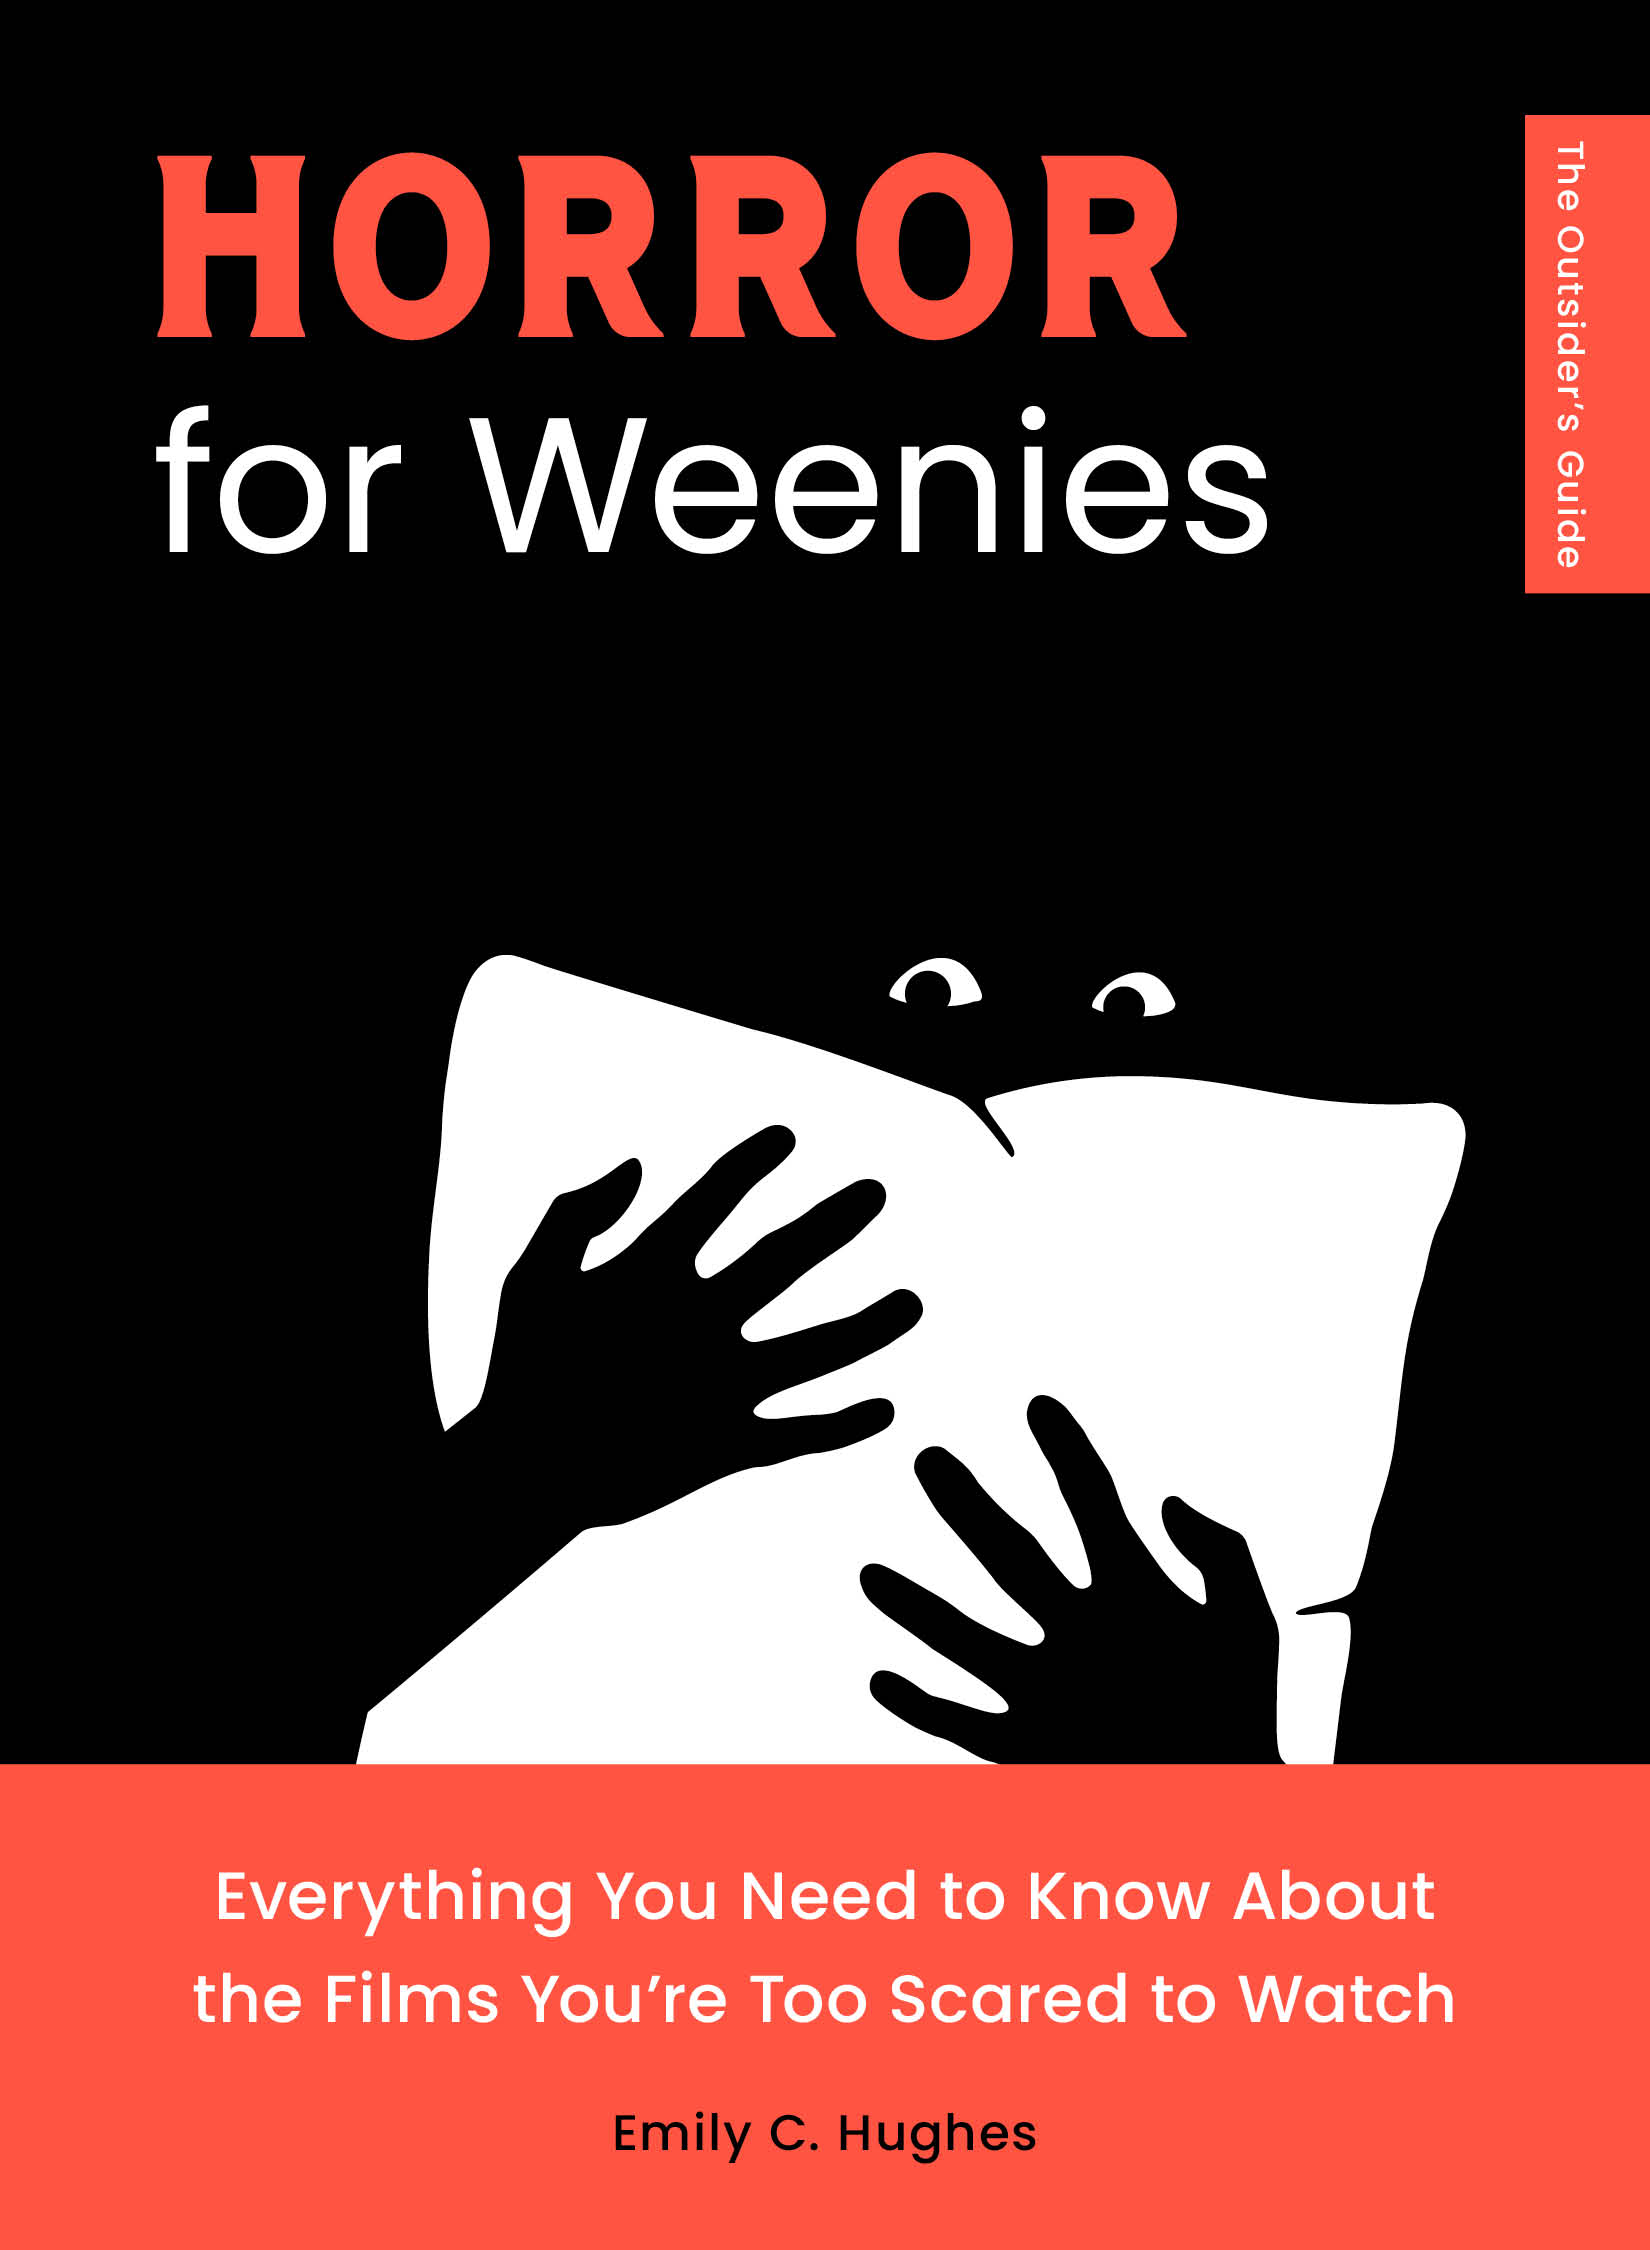 Horror for Weenies